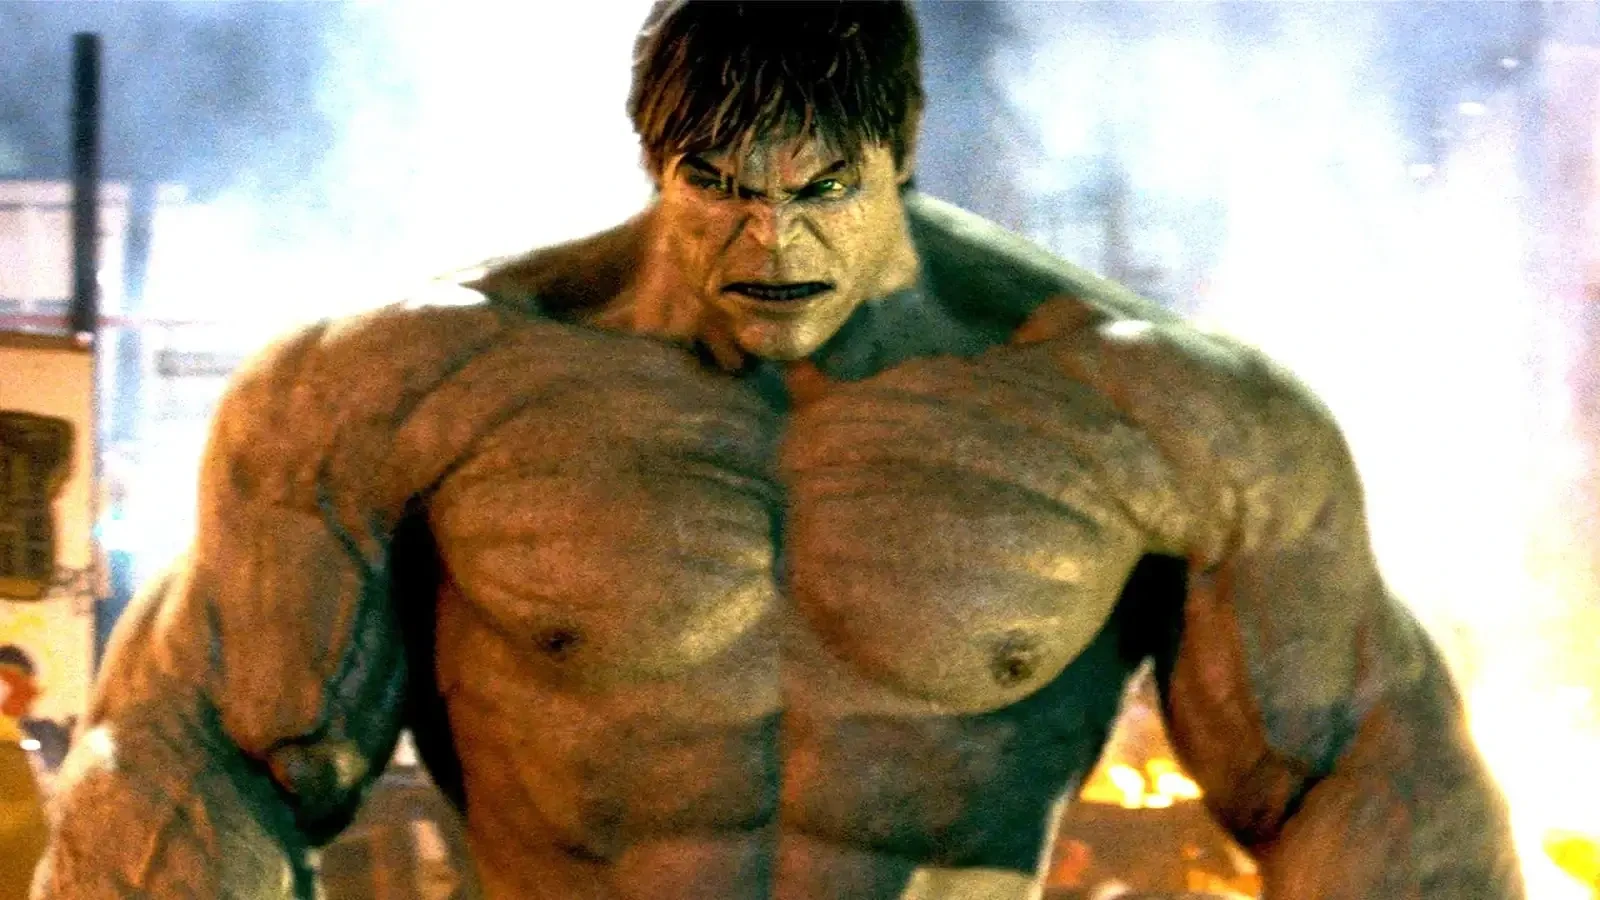 Edward Norton as Hulk